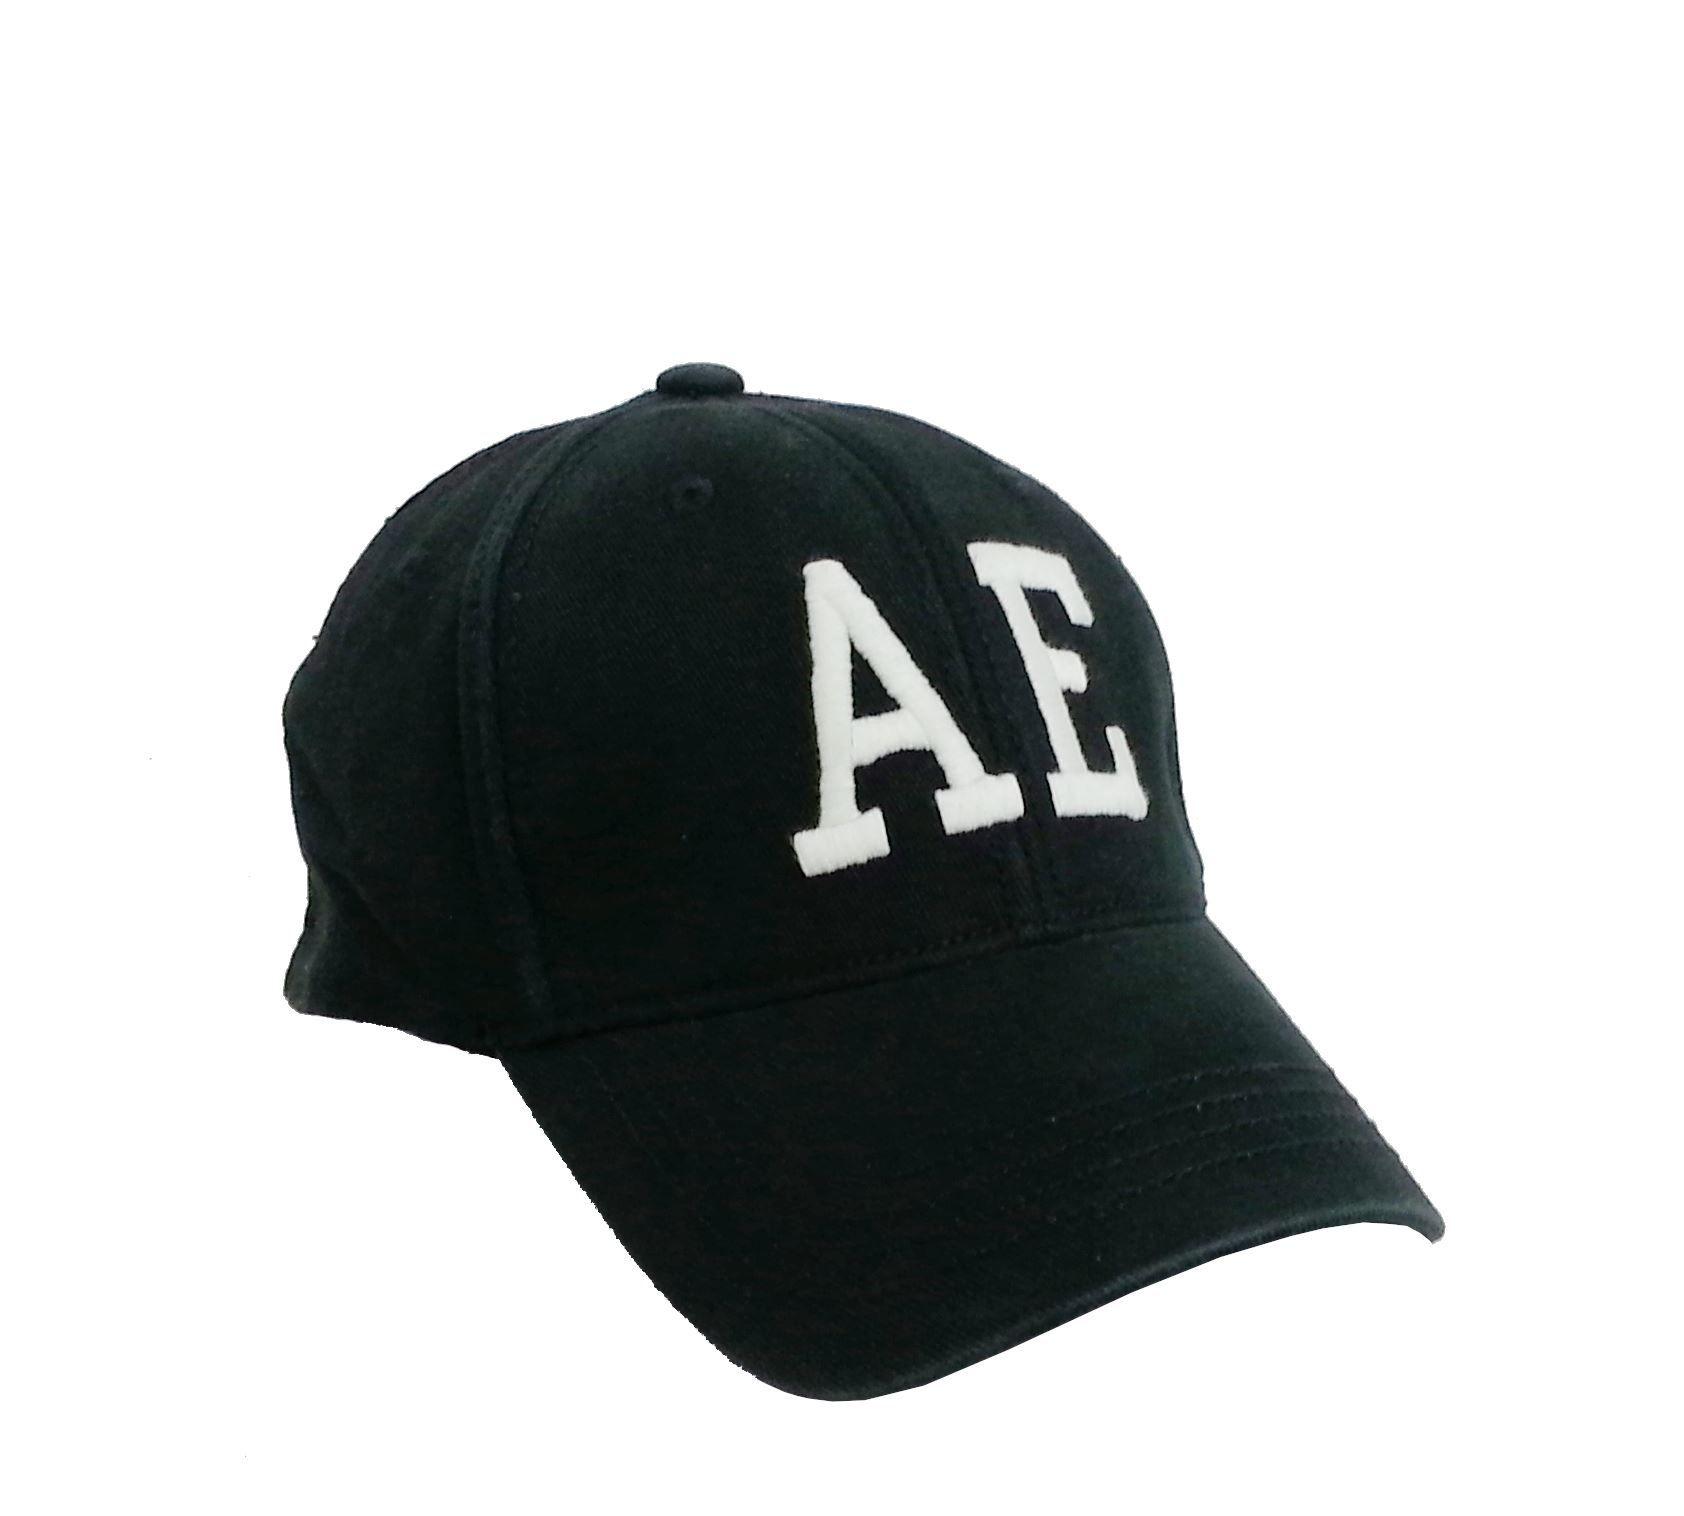 White American Eagle Logo - American Eagle Outfitters Black w/ White AE Logo Adult Baseball Cap ...